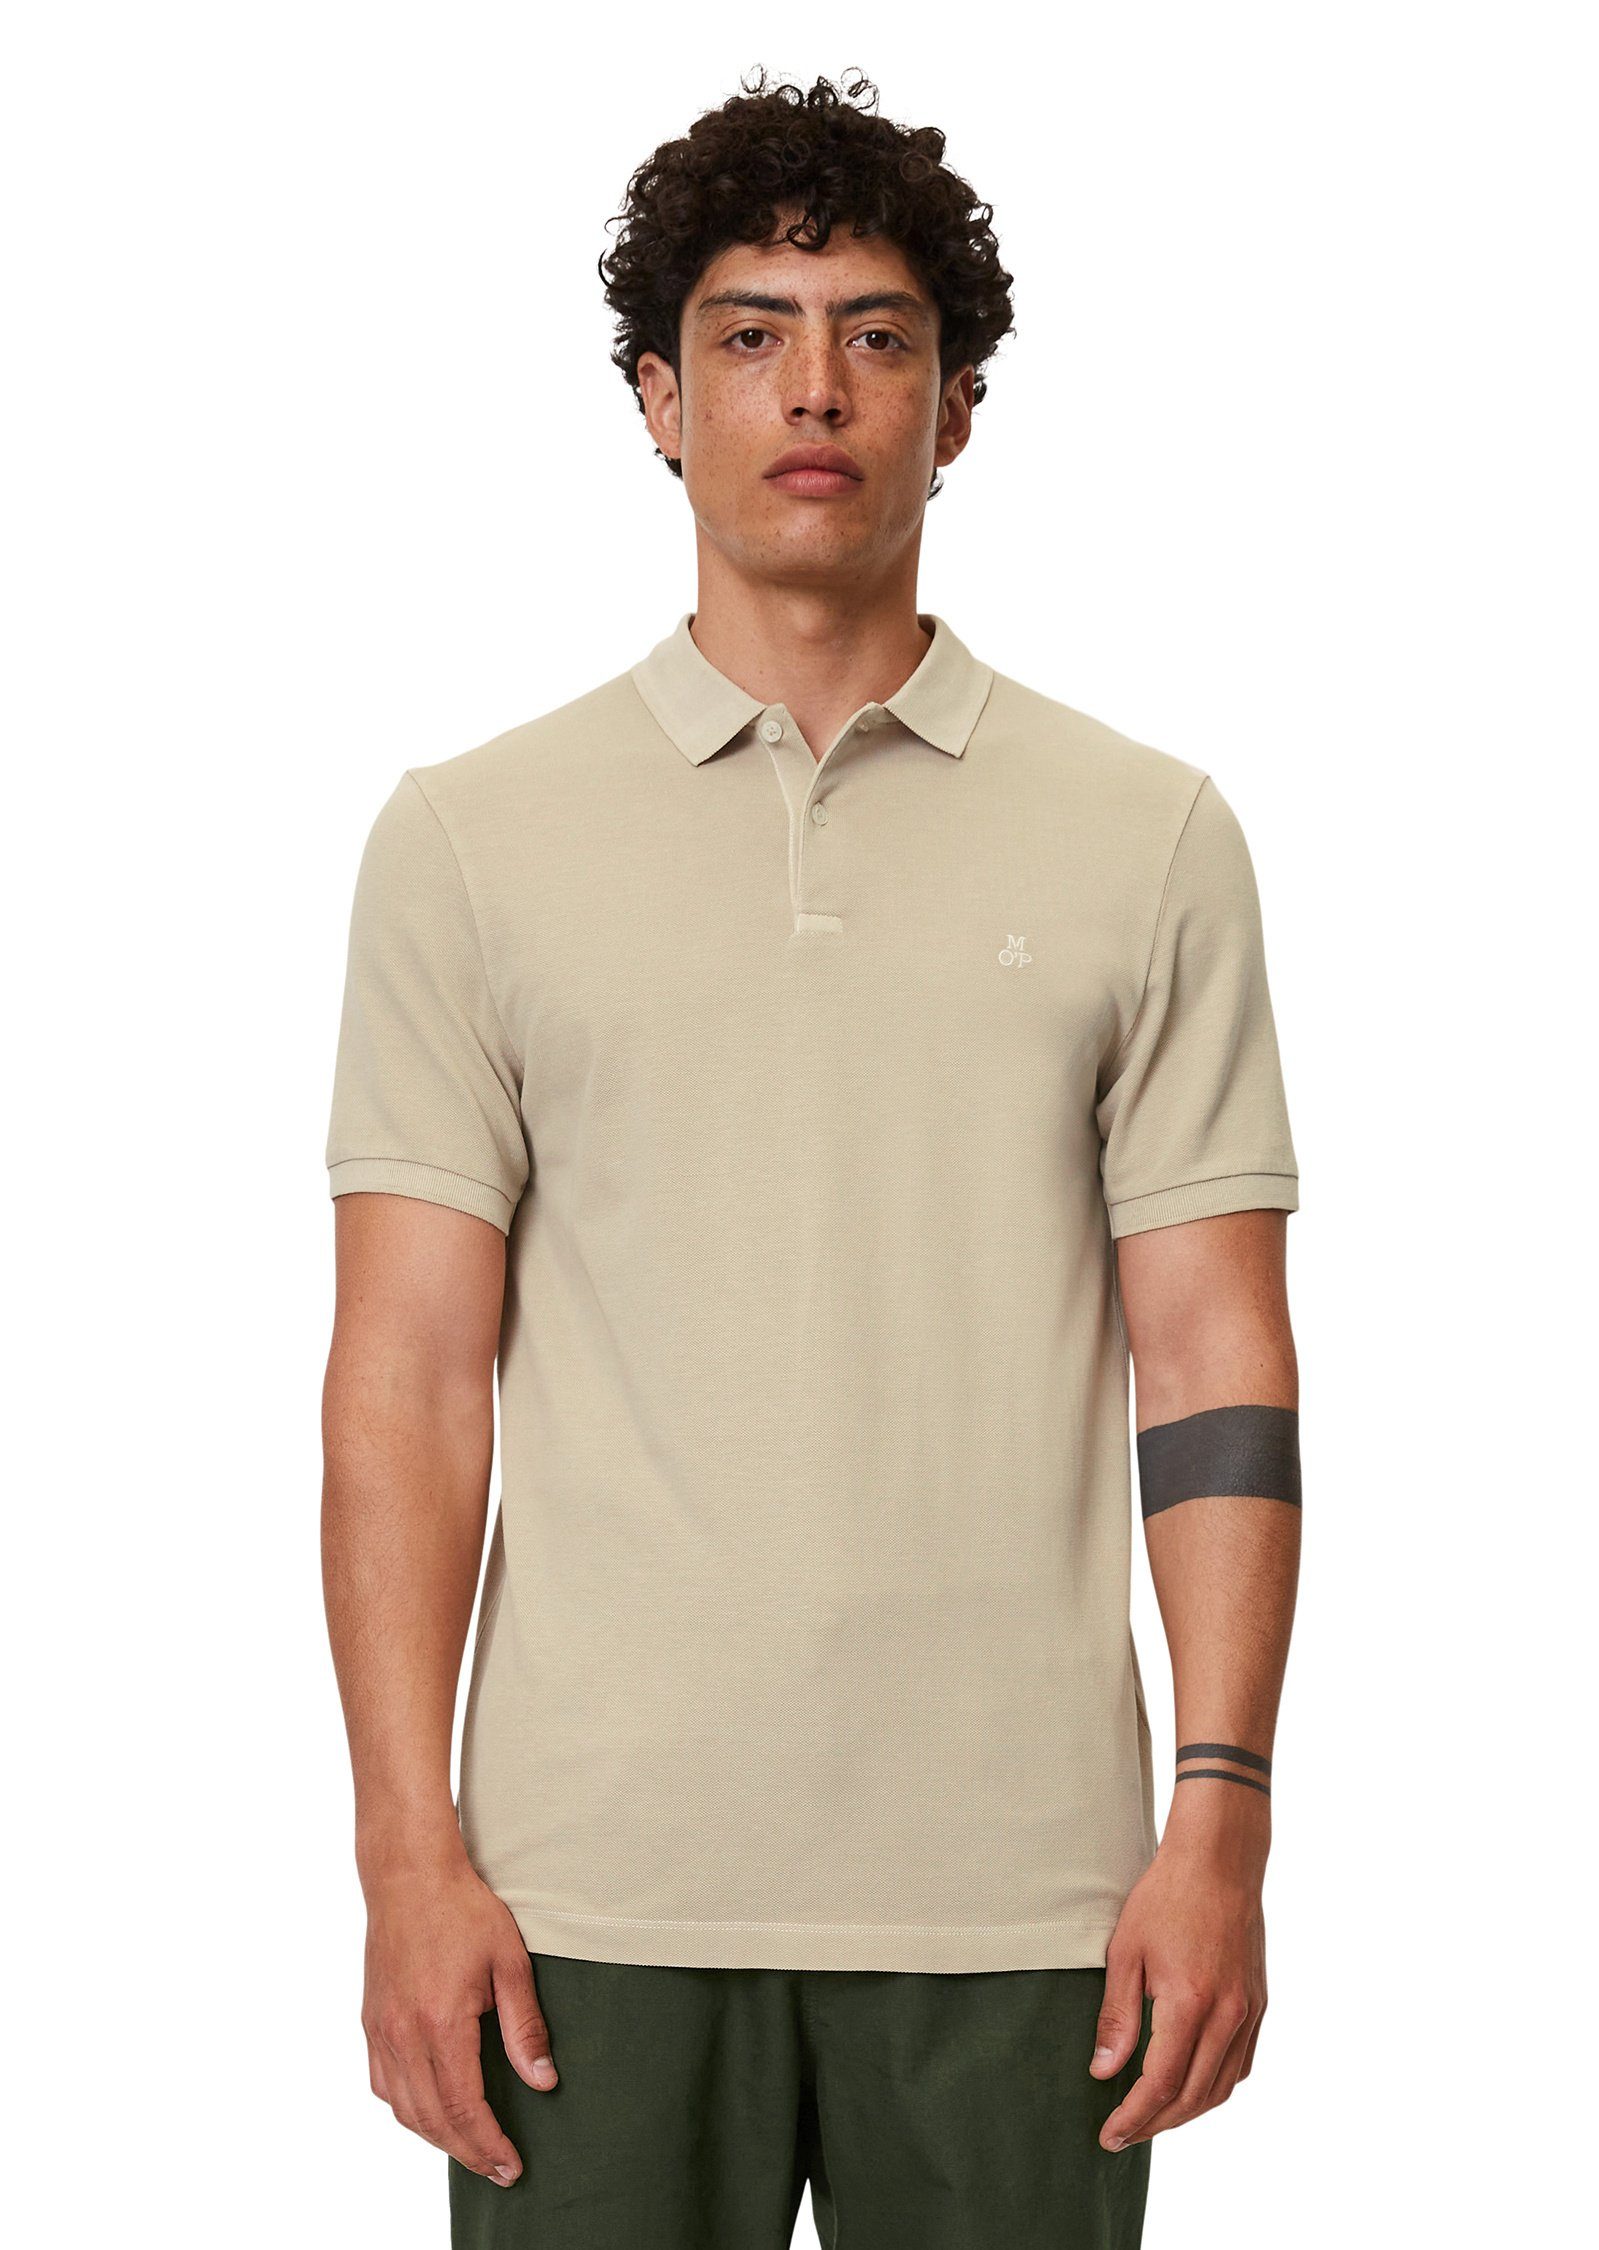 Marc O'Polo Poloshirt aus Organic Cotton-Stretch weiß | Poloshirts